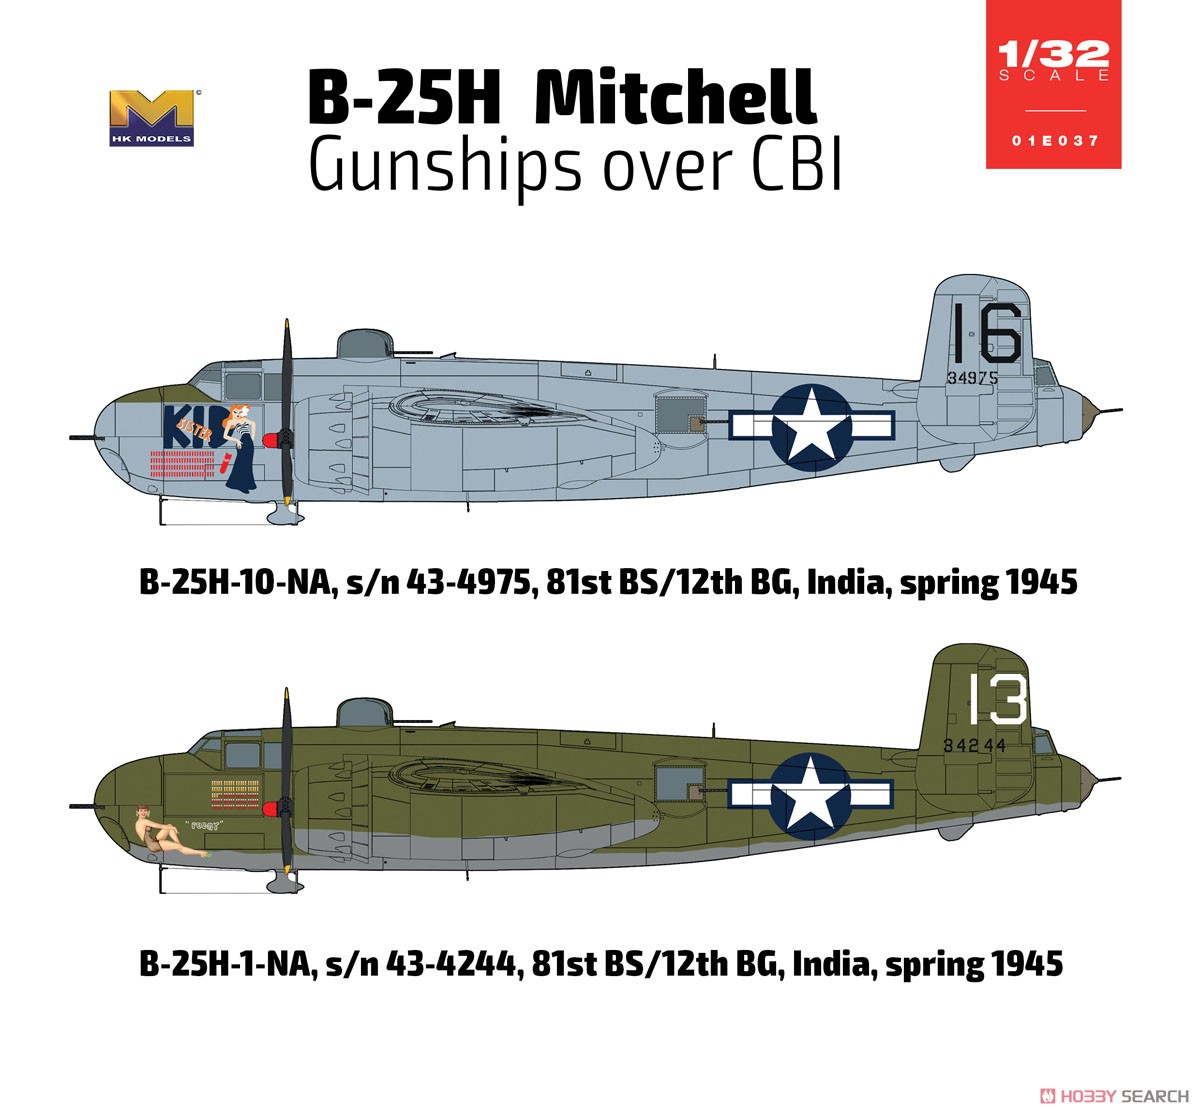 B-25H ミッチェル ガンシップ over CBI (プラモデル) 塗装1